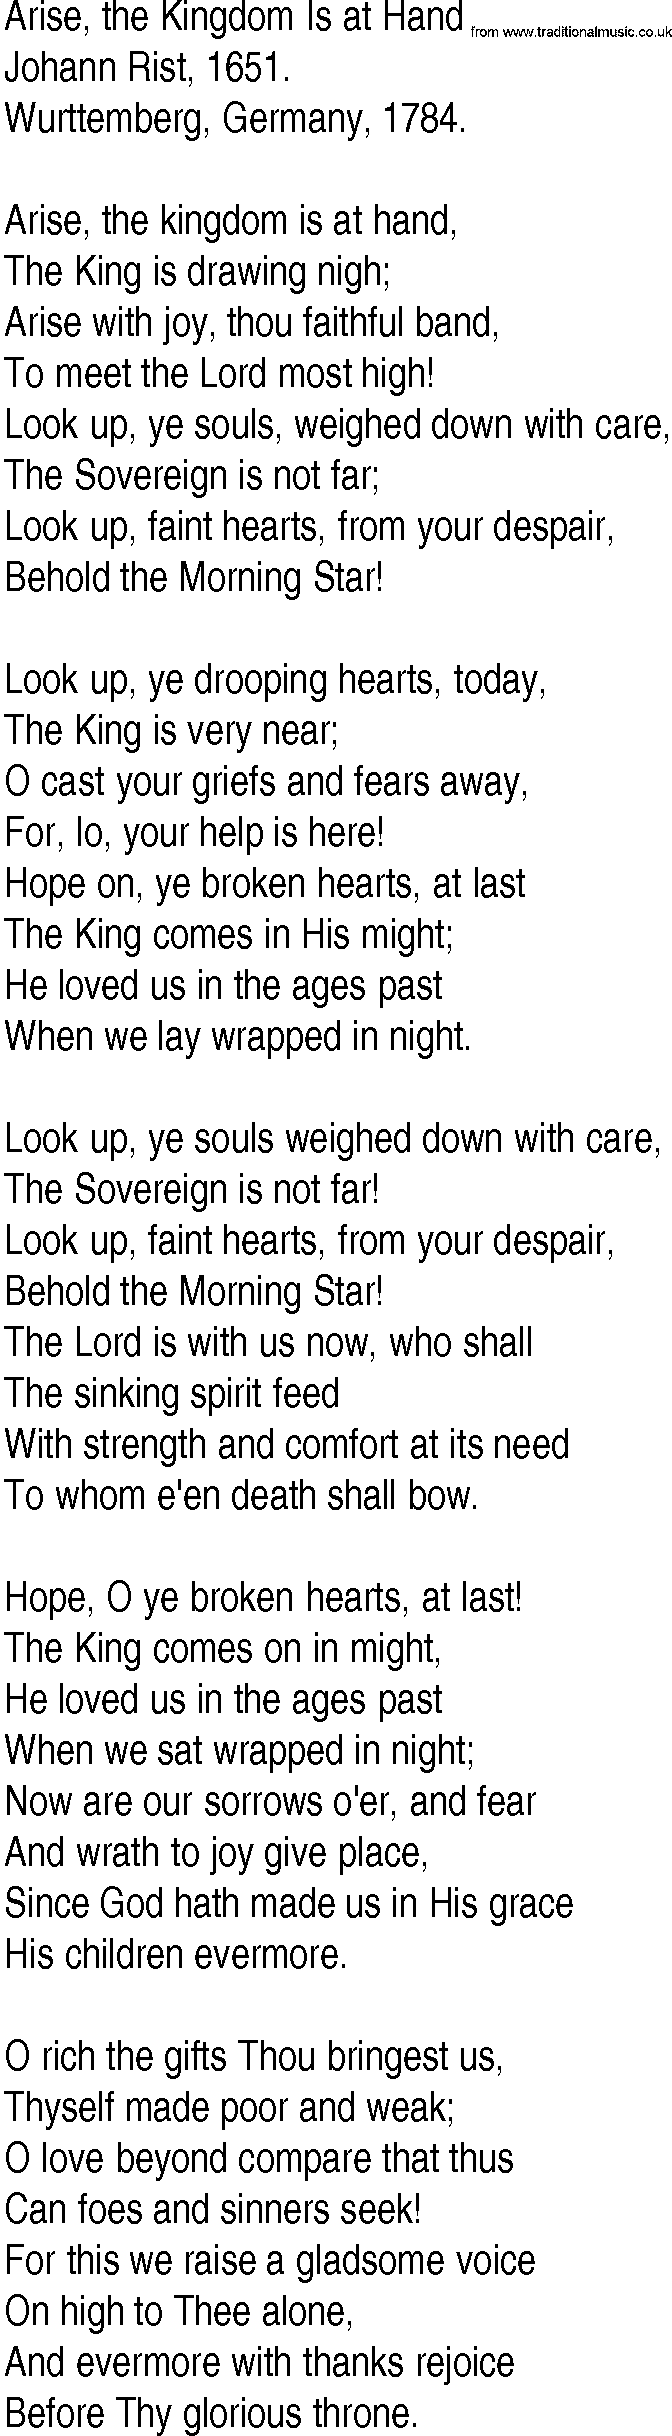 Hymn and Gospel Song: Arise, the Kingdom Is at Hand by Johann Rist lyrics